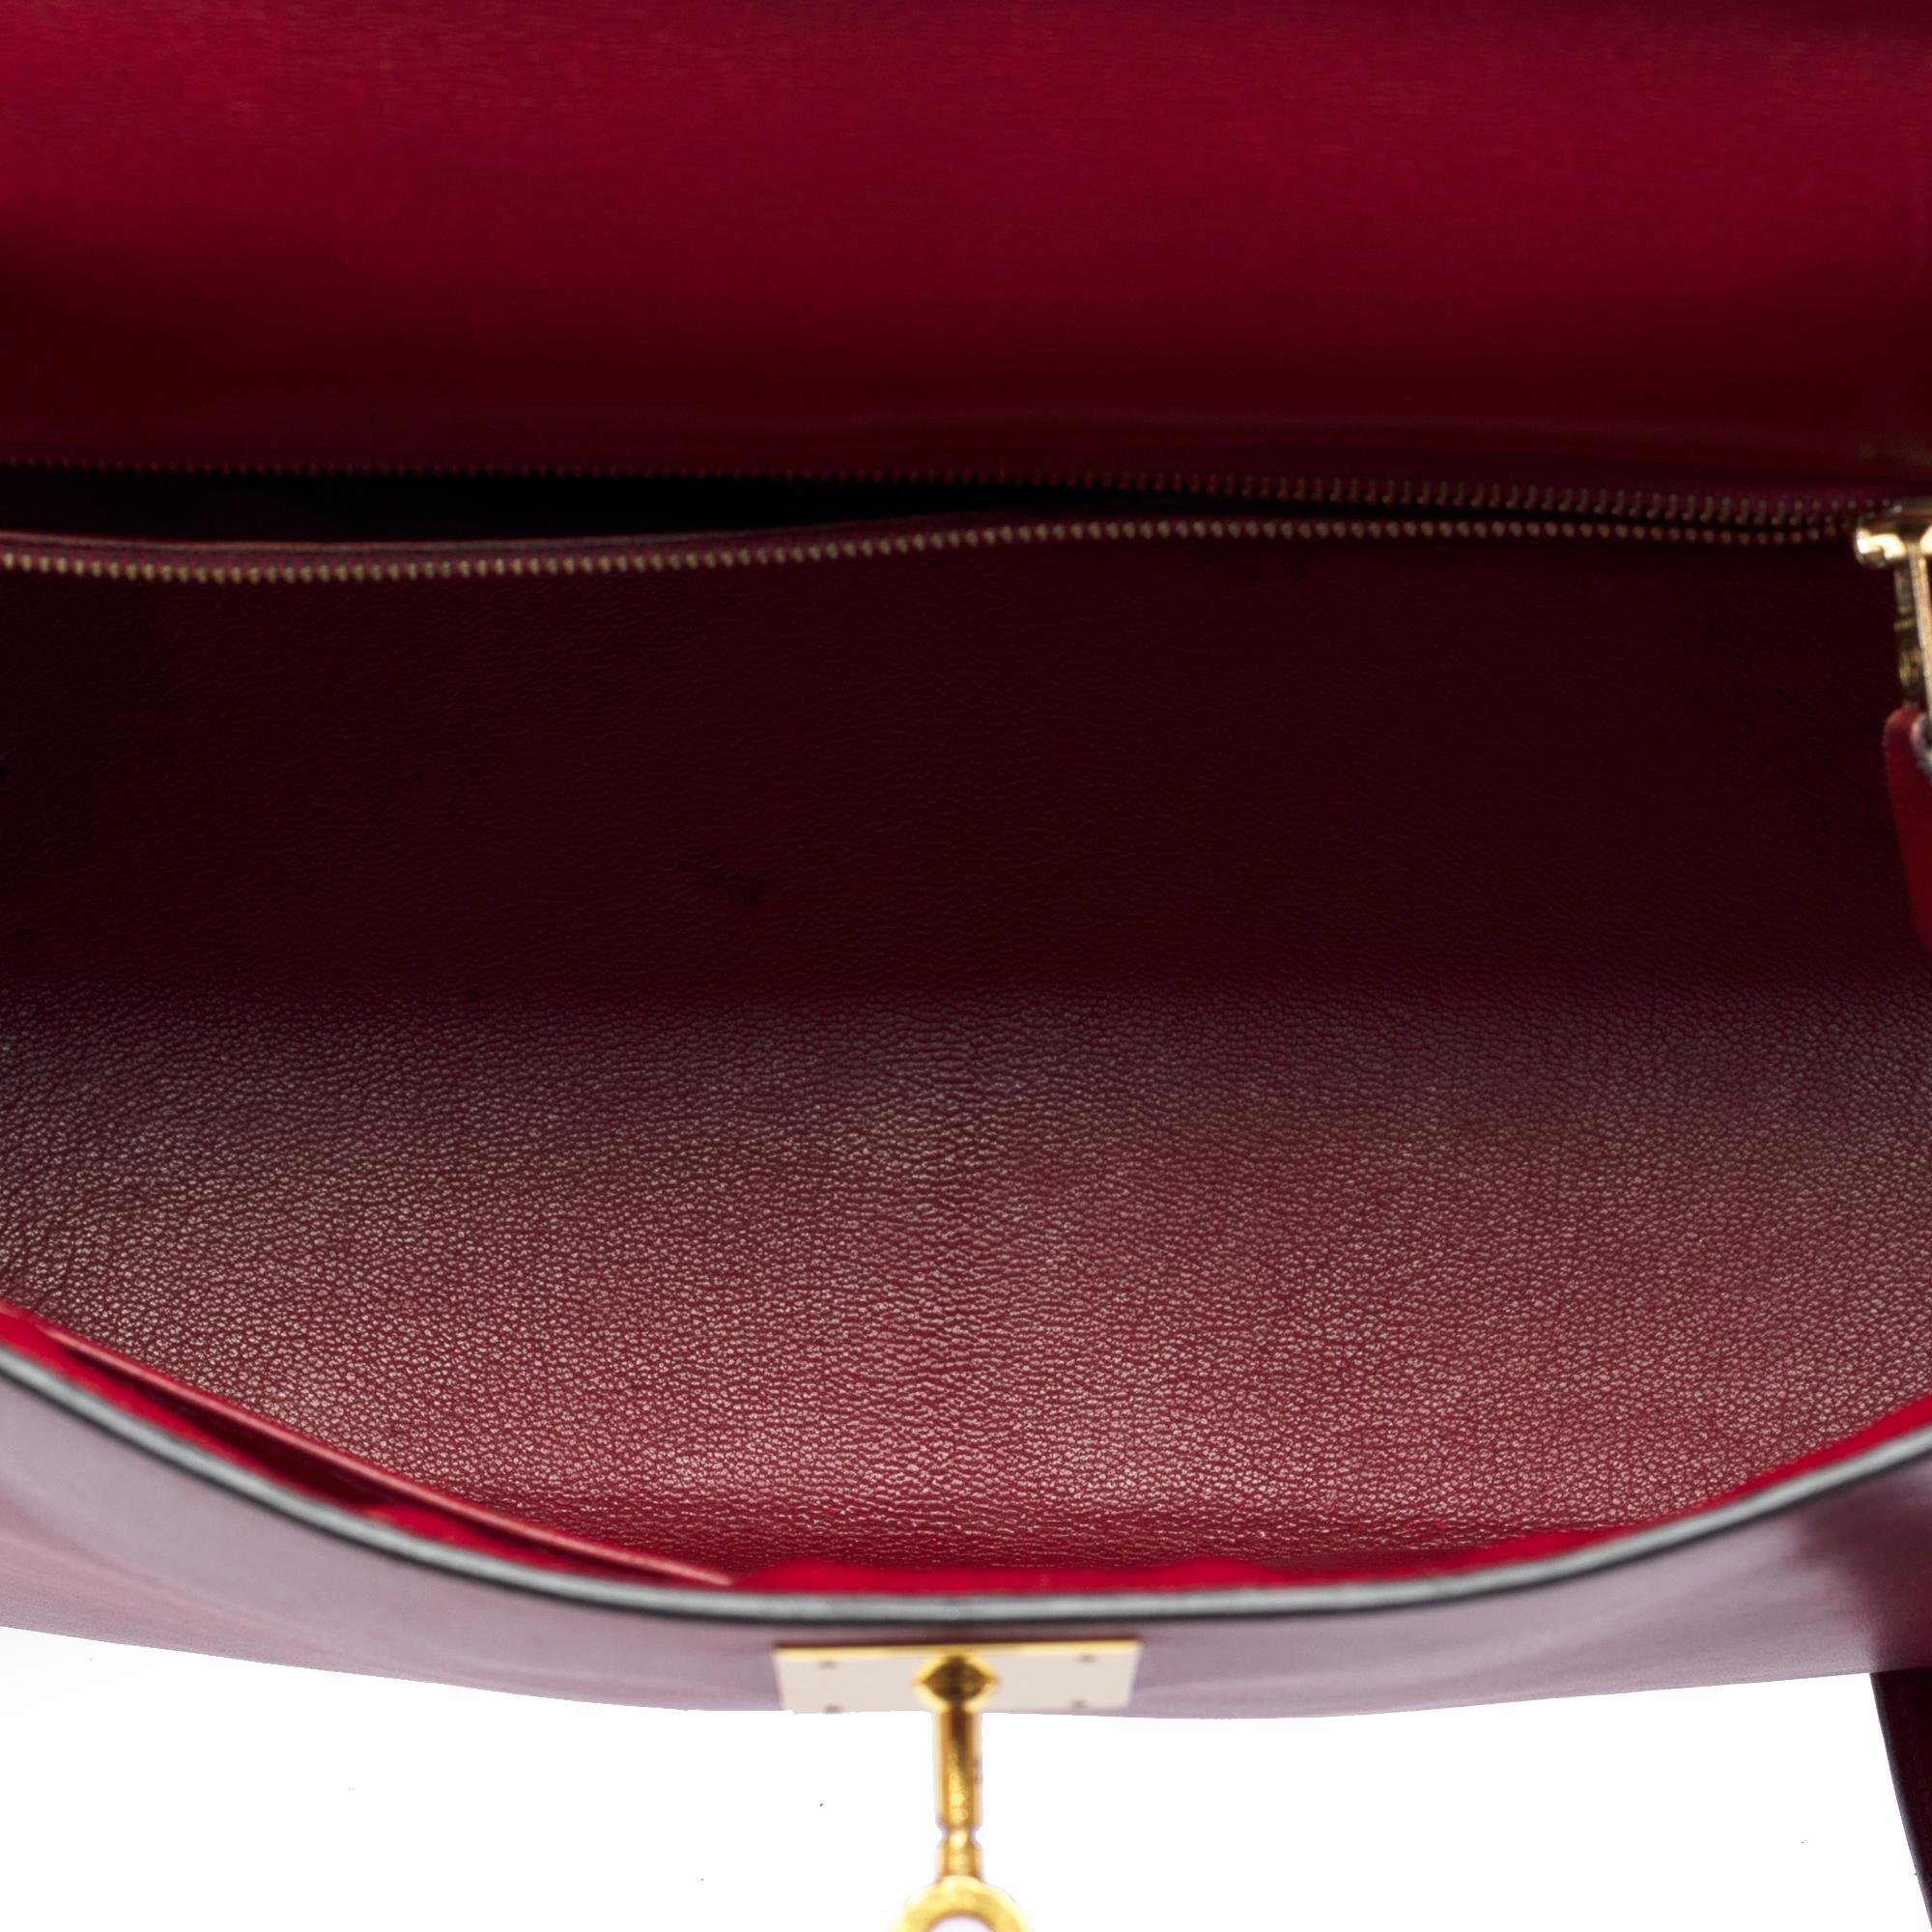 Hermès Kelly 32 retourne handbag strap in Burgundy box calfskin leather, GHW 4